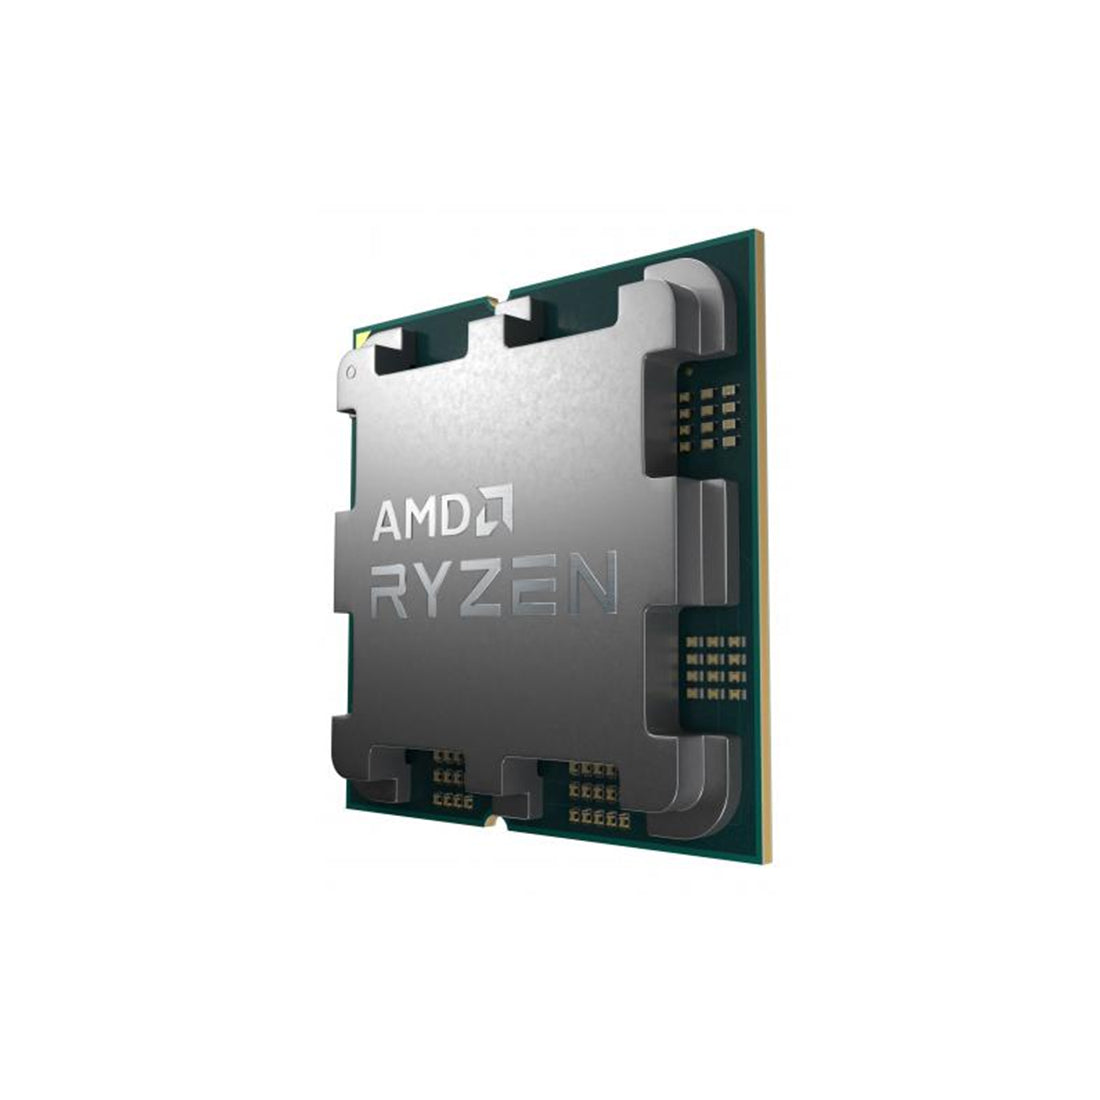 AMD Ryzen 9 7950X Desktop Processor 16 Cores up to 5.7GHz 80MB Cache AM5 Socket with Radeon Graphics